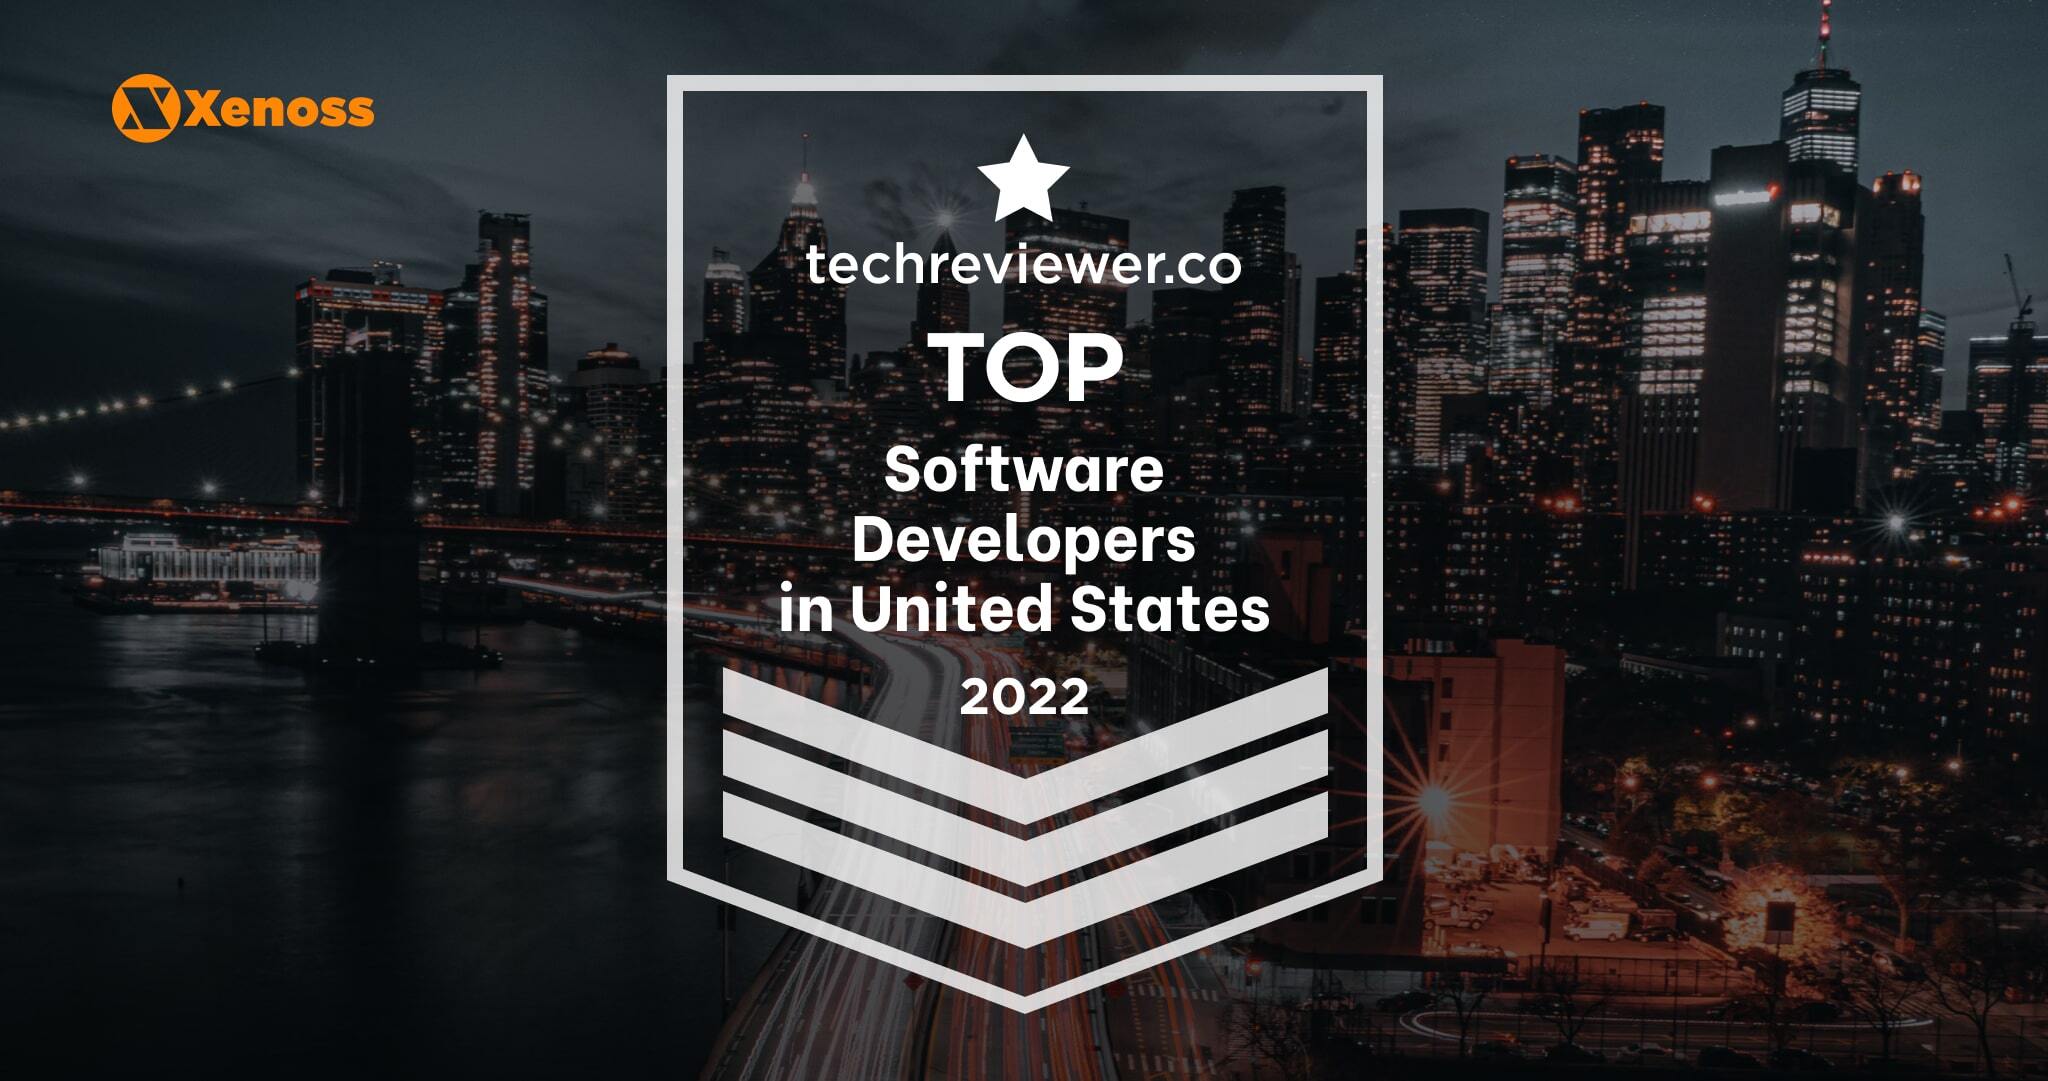 Xenoss Is Among Techreviewer’s Top US Software Development Companies in 2022